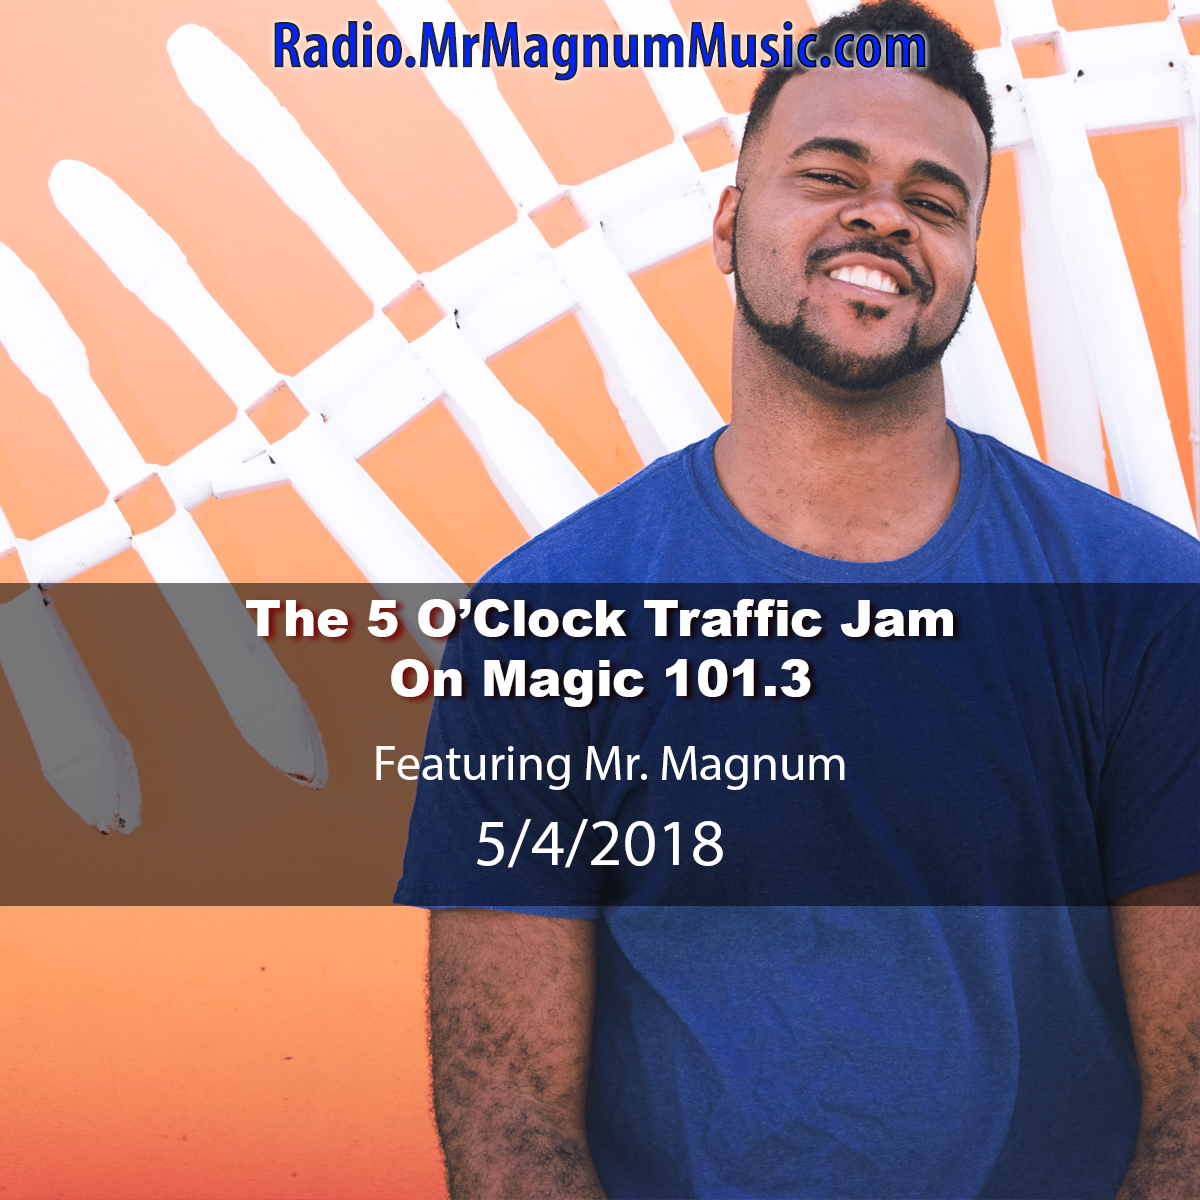 5 O’Clock Traffic Jam 5-4-2018 on Magic 101.3